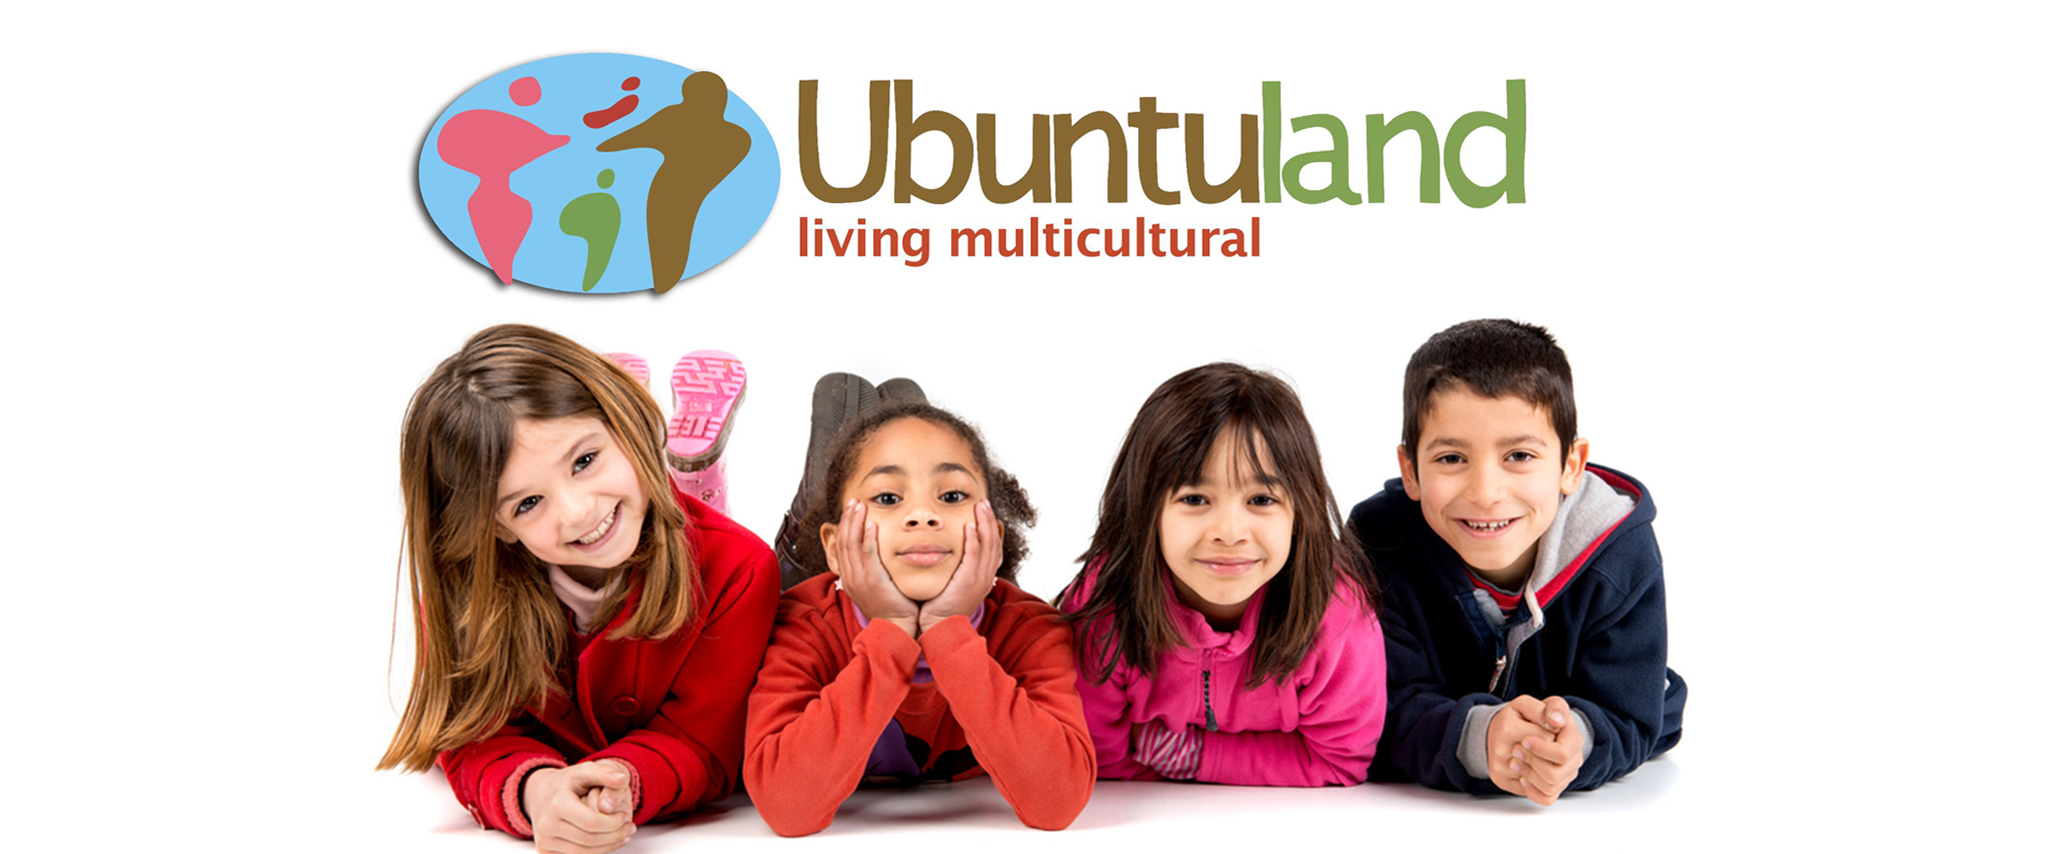 Nace Ubuntuland.com, la primera tienda on-line multicultural